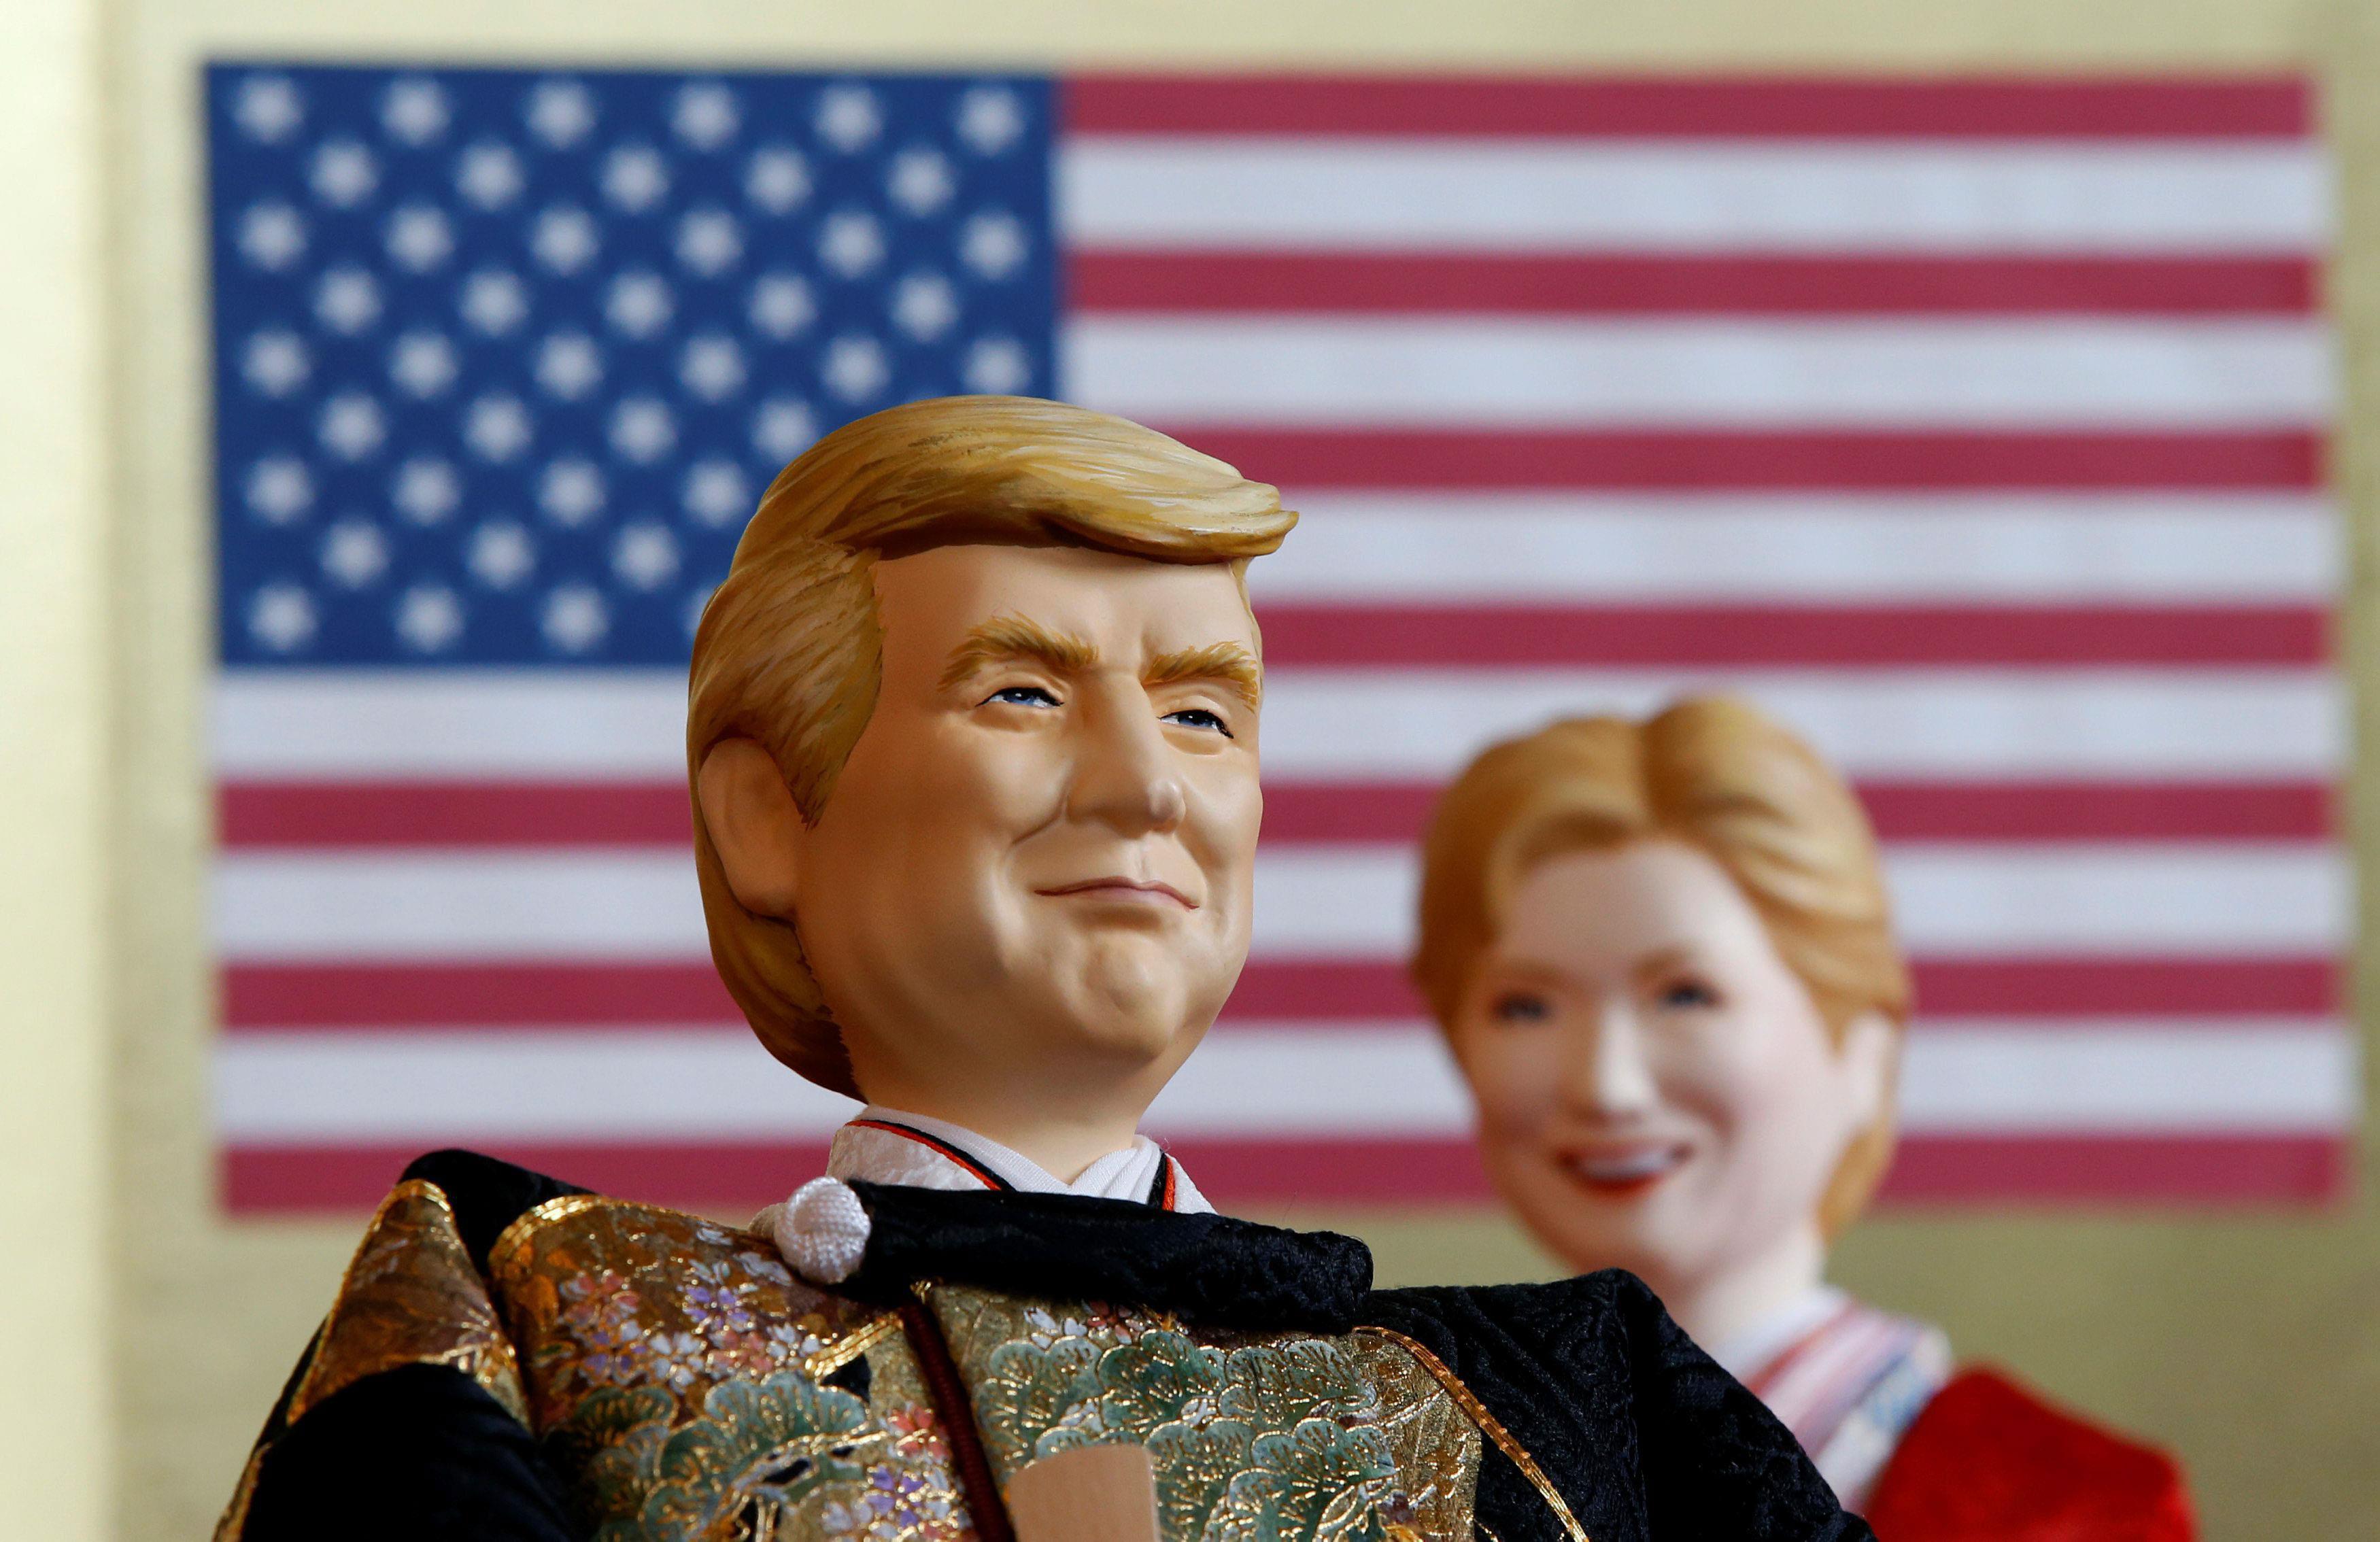 Japanese doll-maker Kyugetsu Inc's dolls depicting U.S. President Trump and former Democratic presid